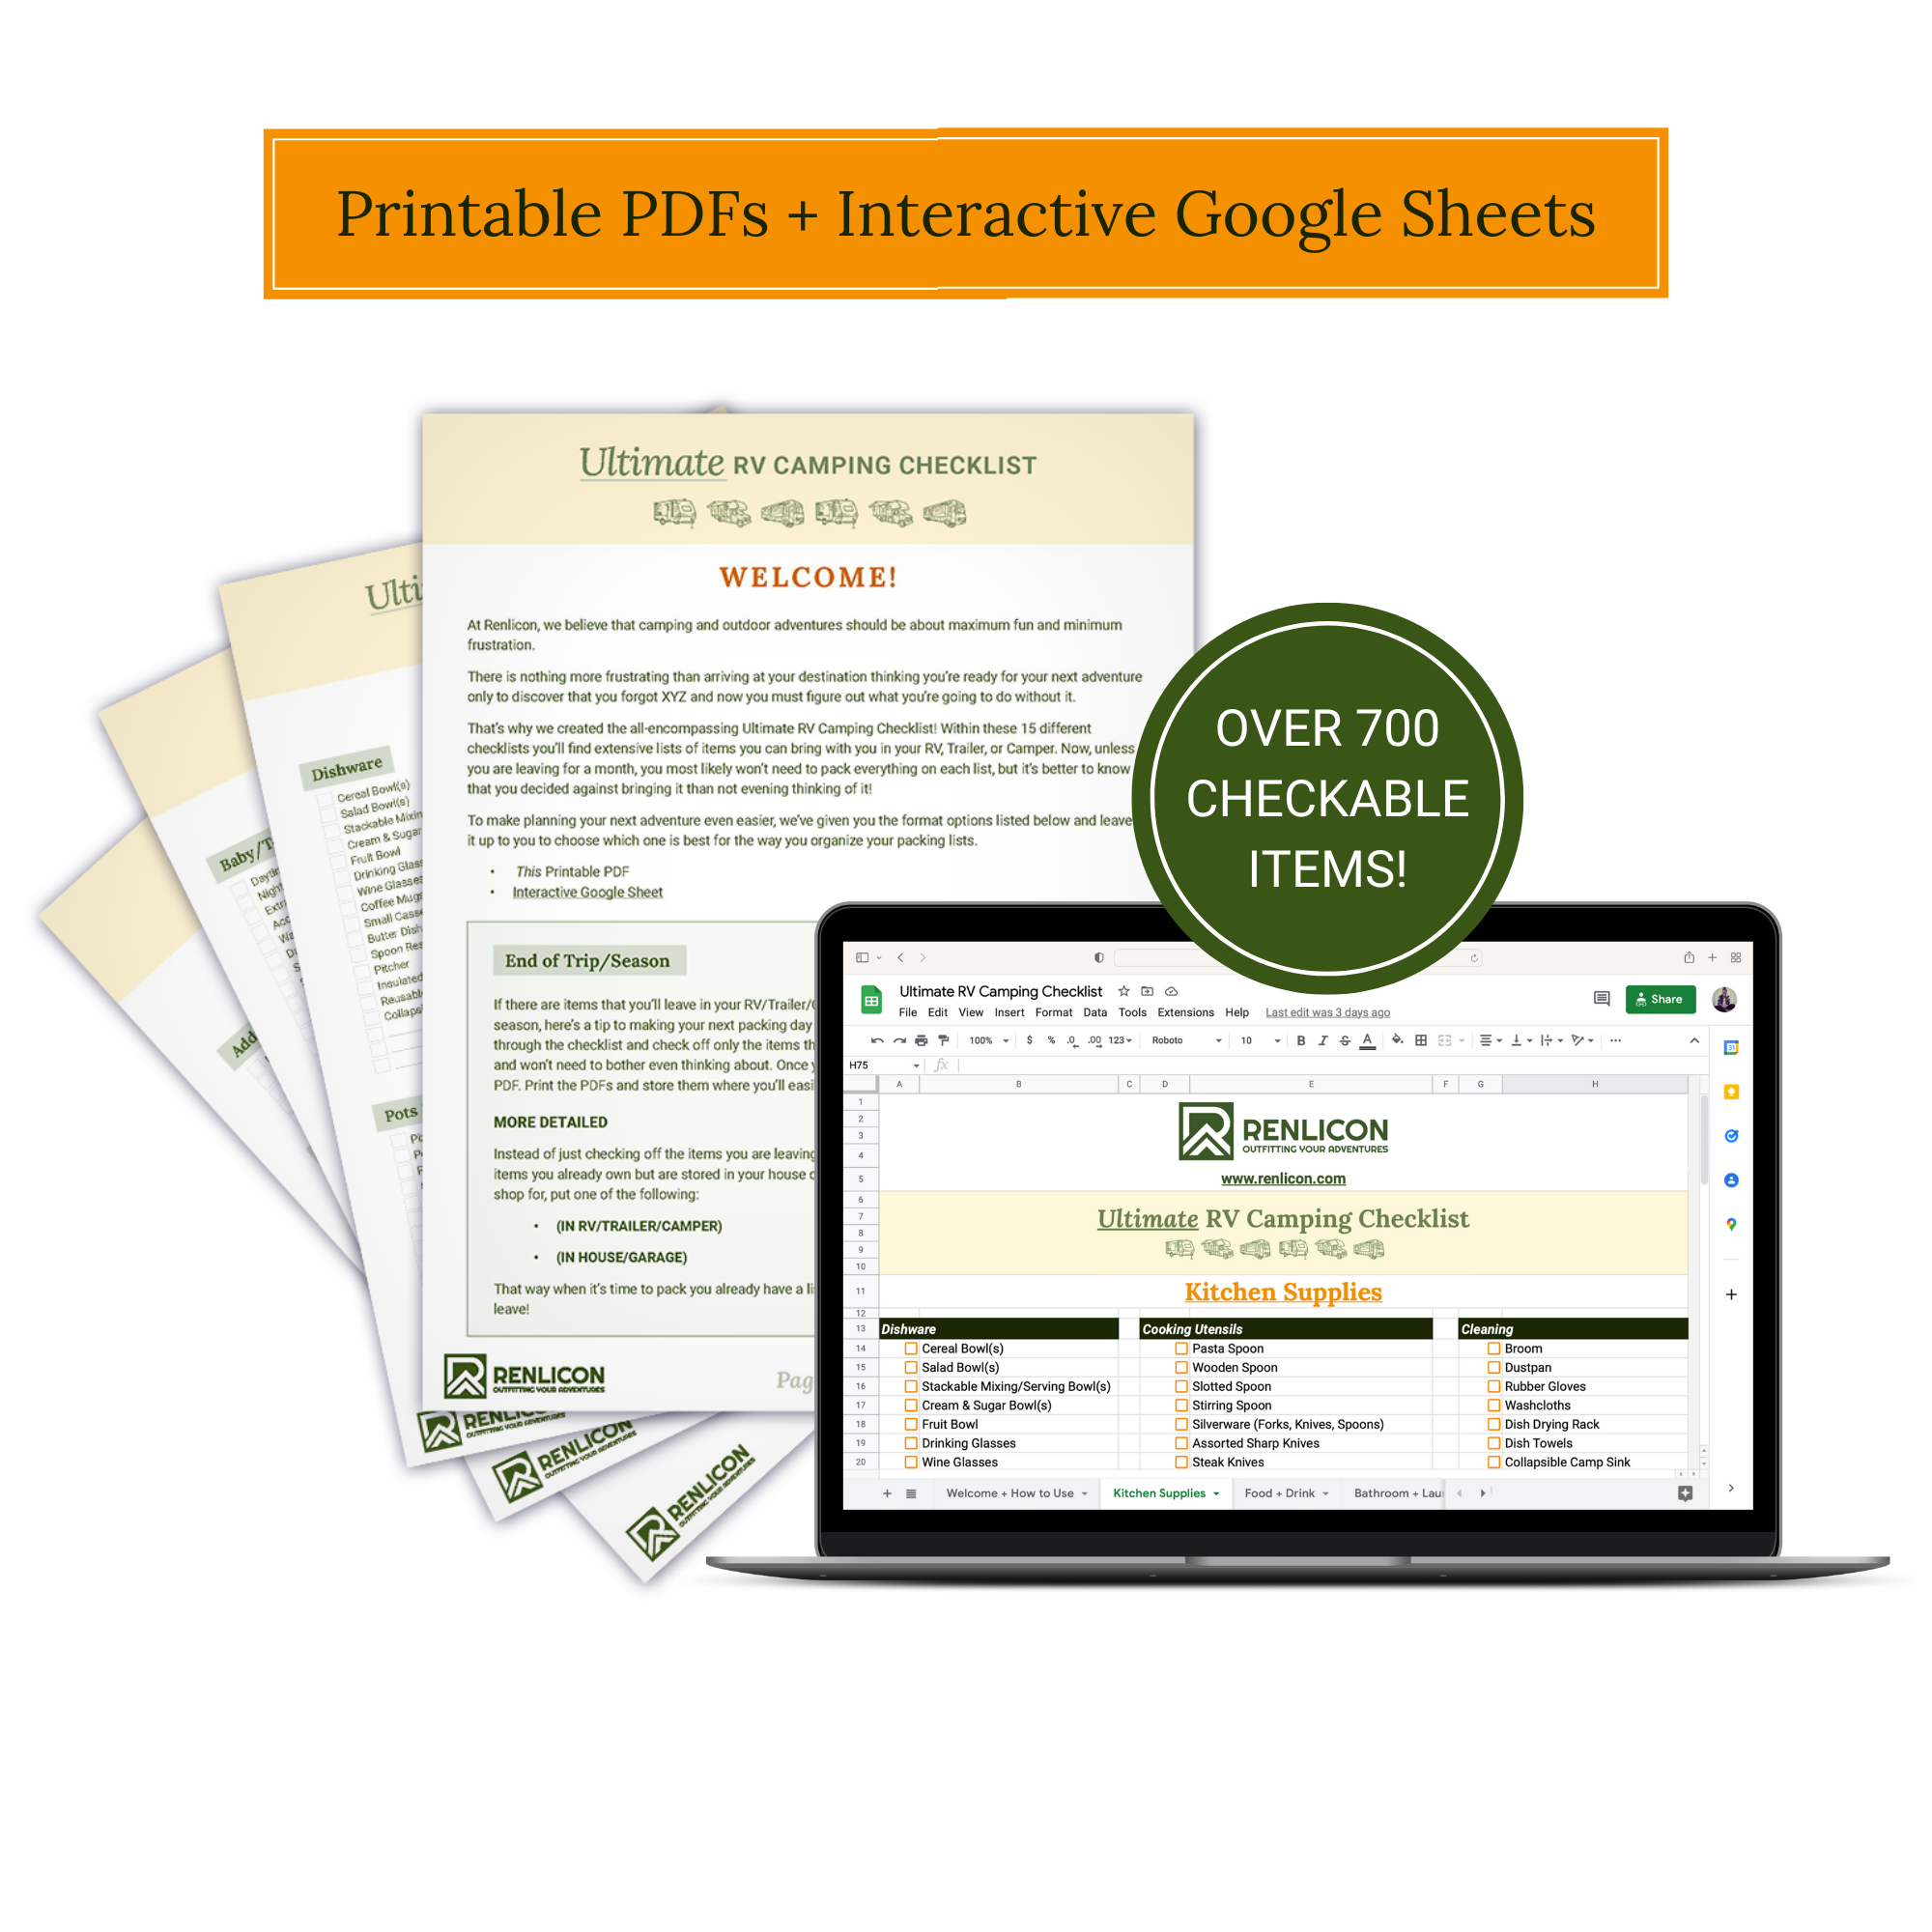 Printable PDFs + Interactive Google Sheet